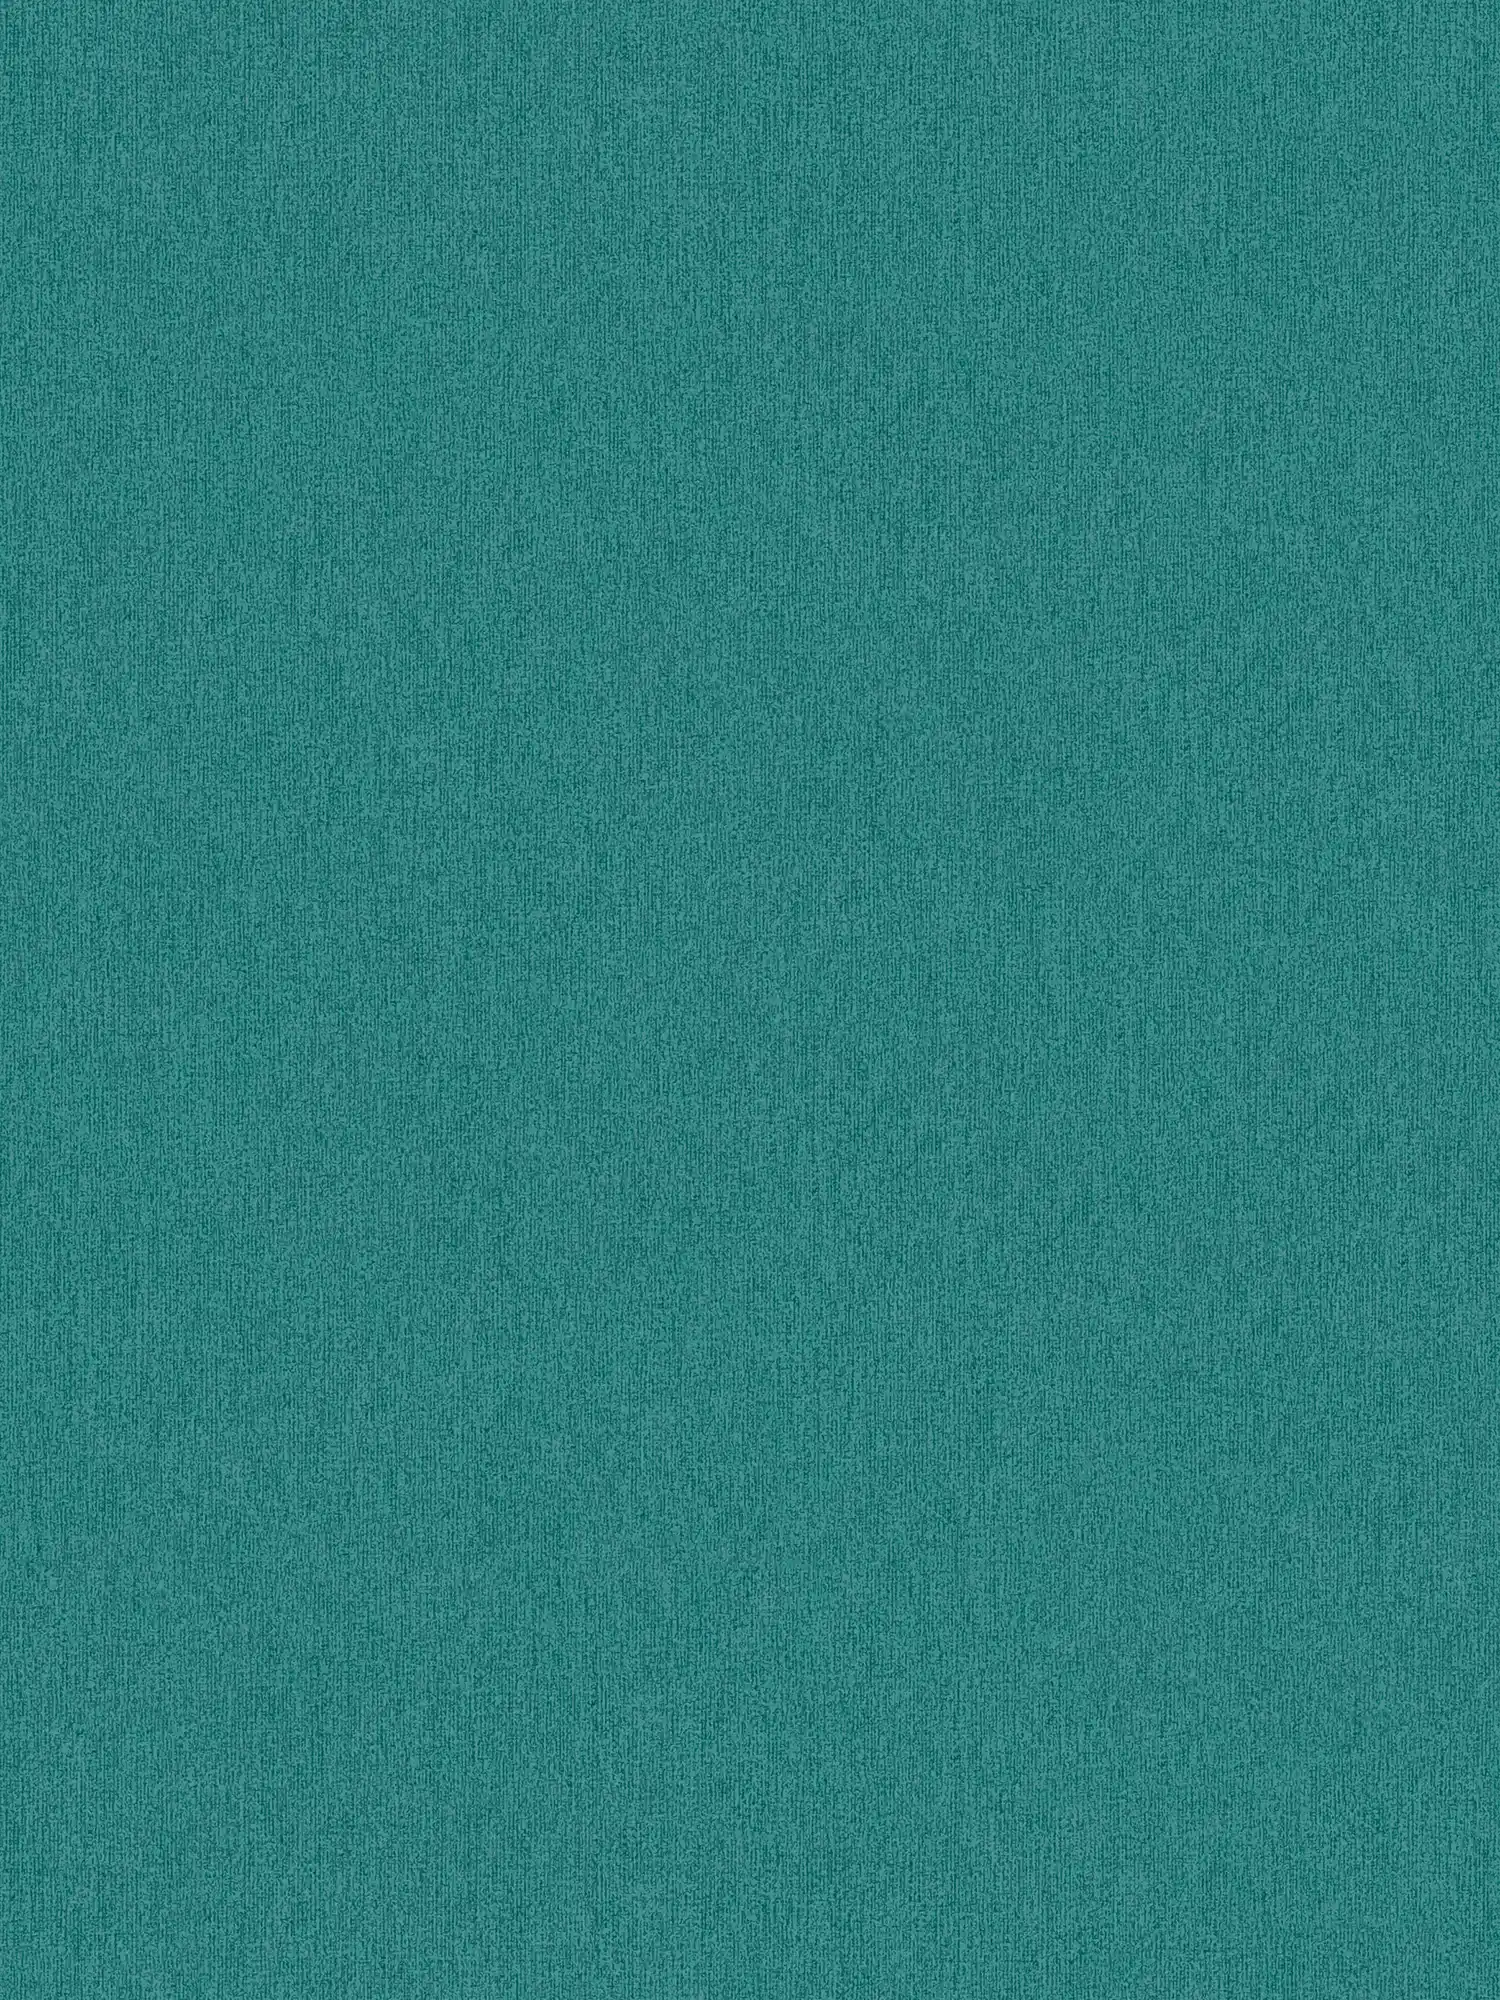 Uni Tapete in matt & einfarbig mit Struktur Optik – Petrol, Blau
